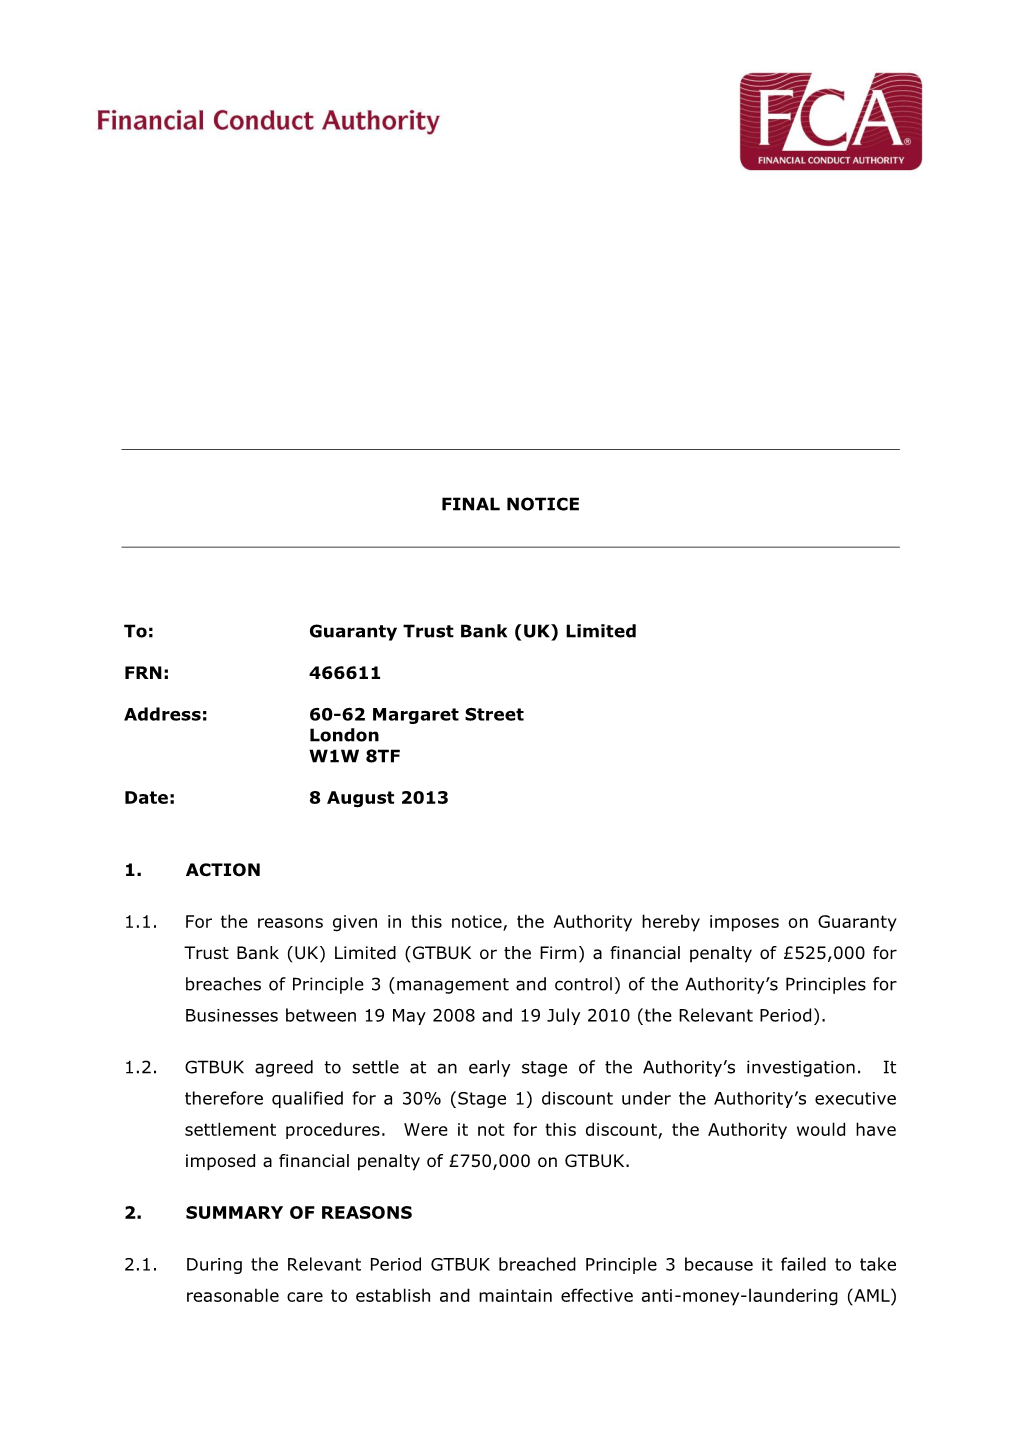 FCA Final Notice 2013: Guaranty Trust Bank (UK) Limited